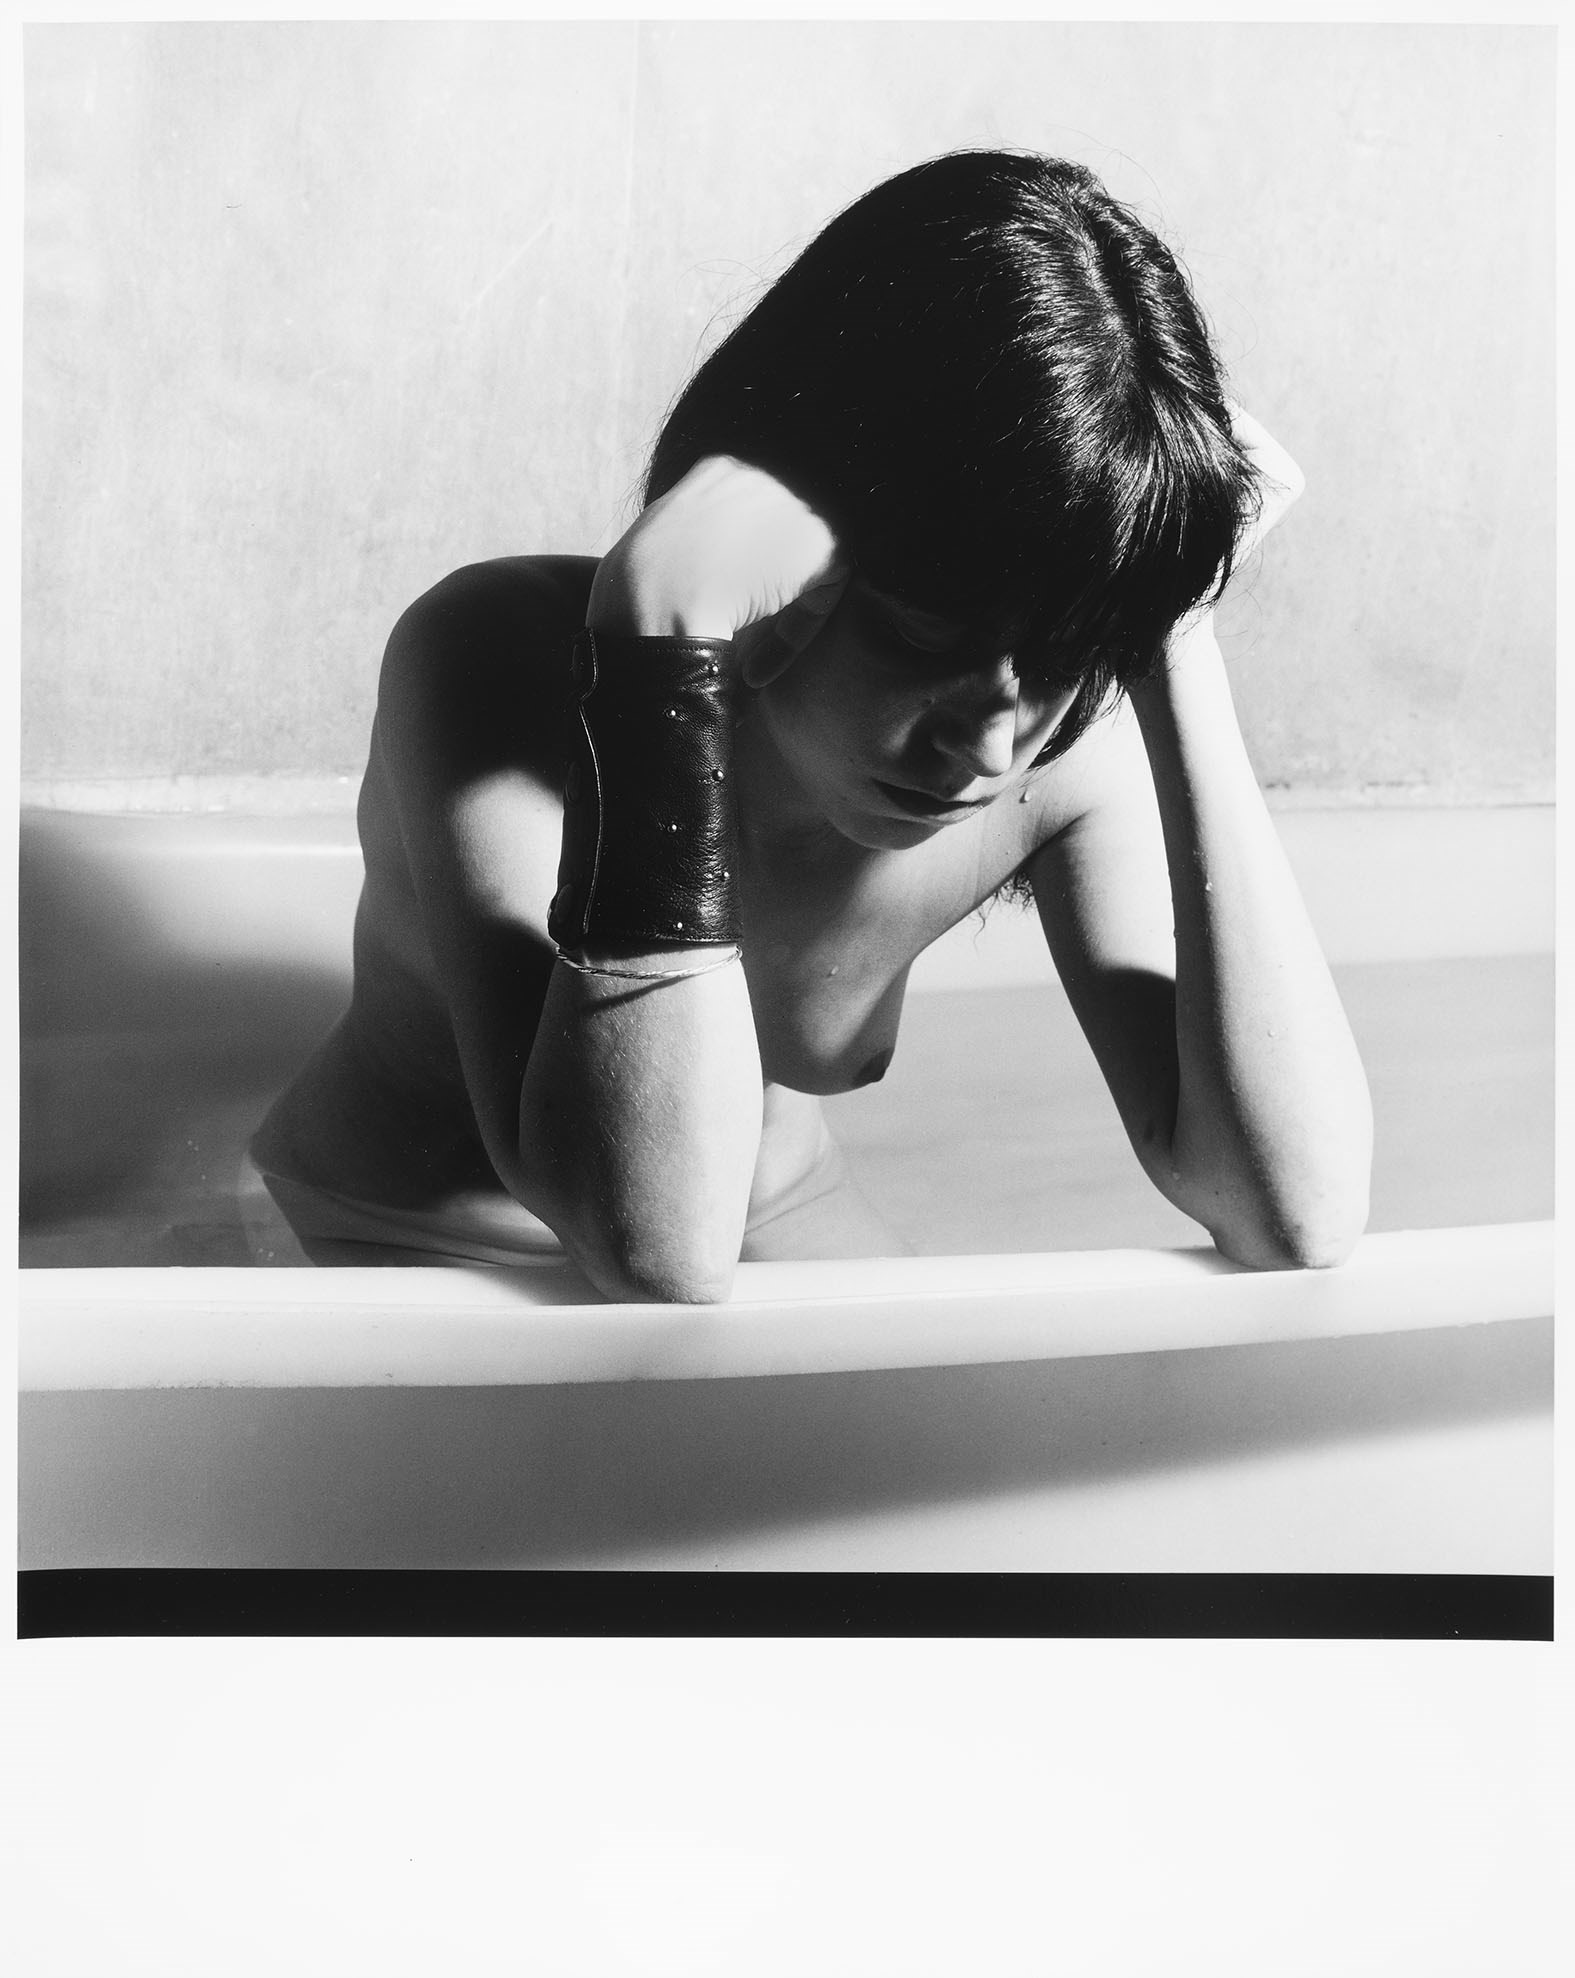 Moyra Davey, “Jane” (1984), from The Shabbiness of Beauty by Moyra Davey & Peter Hujar (MACK, 2021)